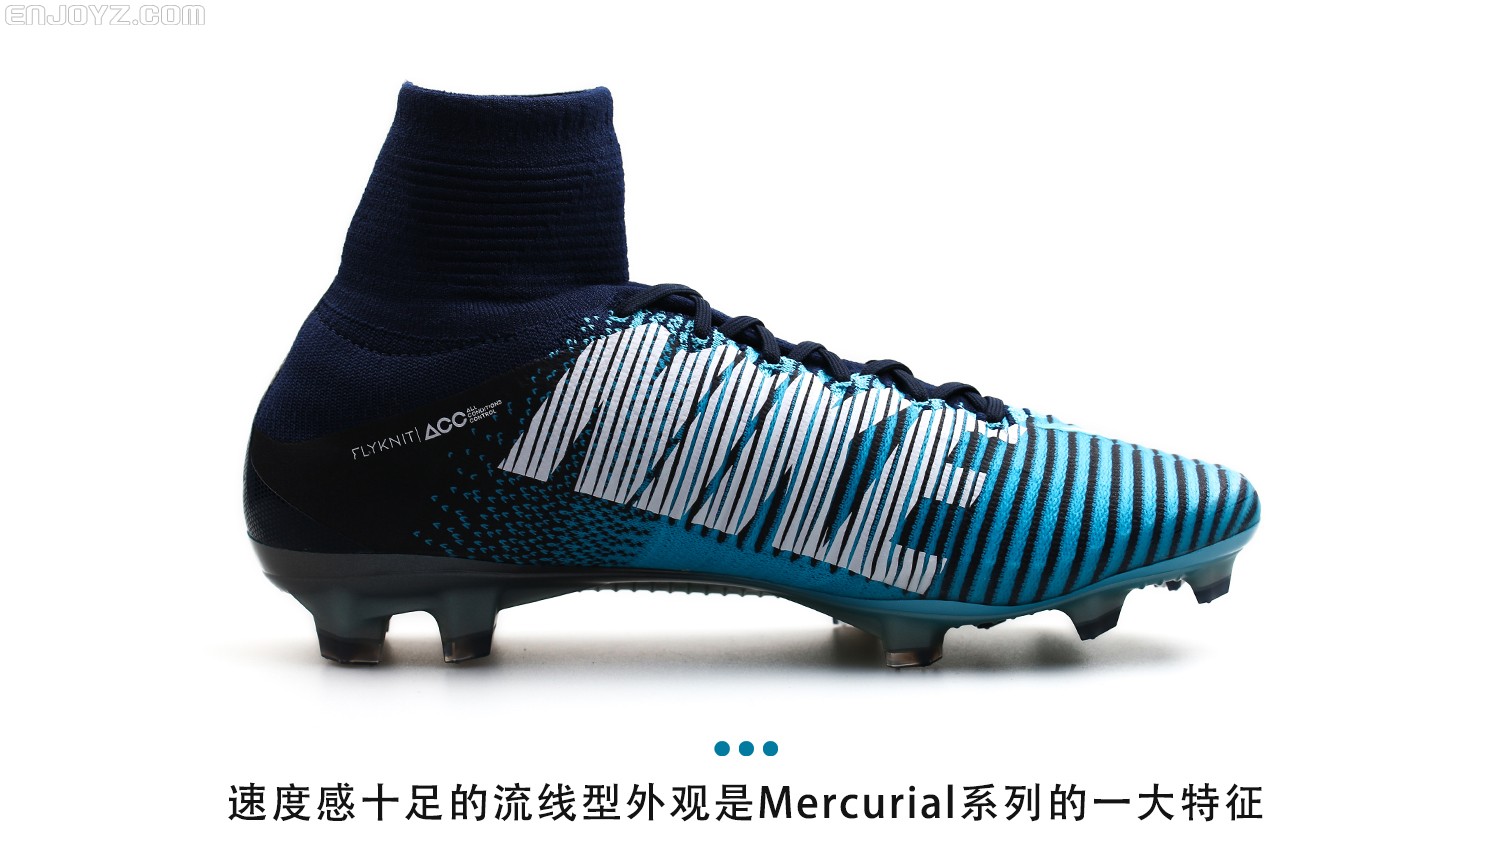 Nike Football Cleats Cheap 2014 Mercurial Superfly IV FG Black